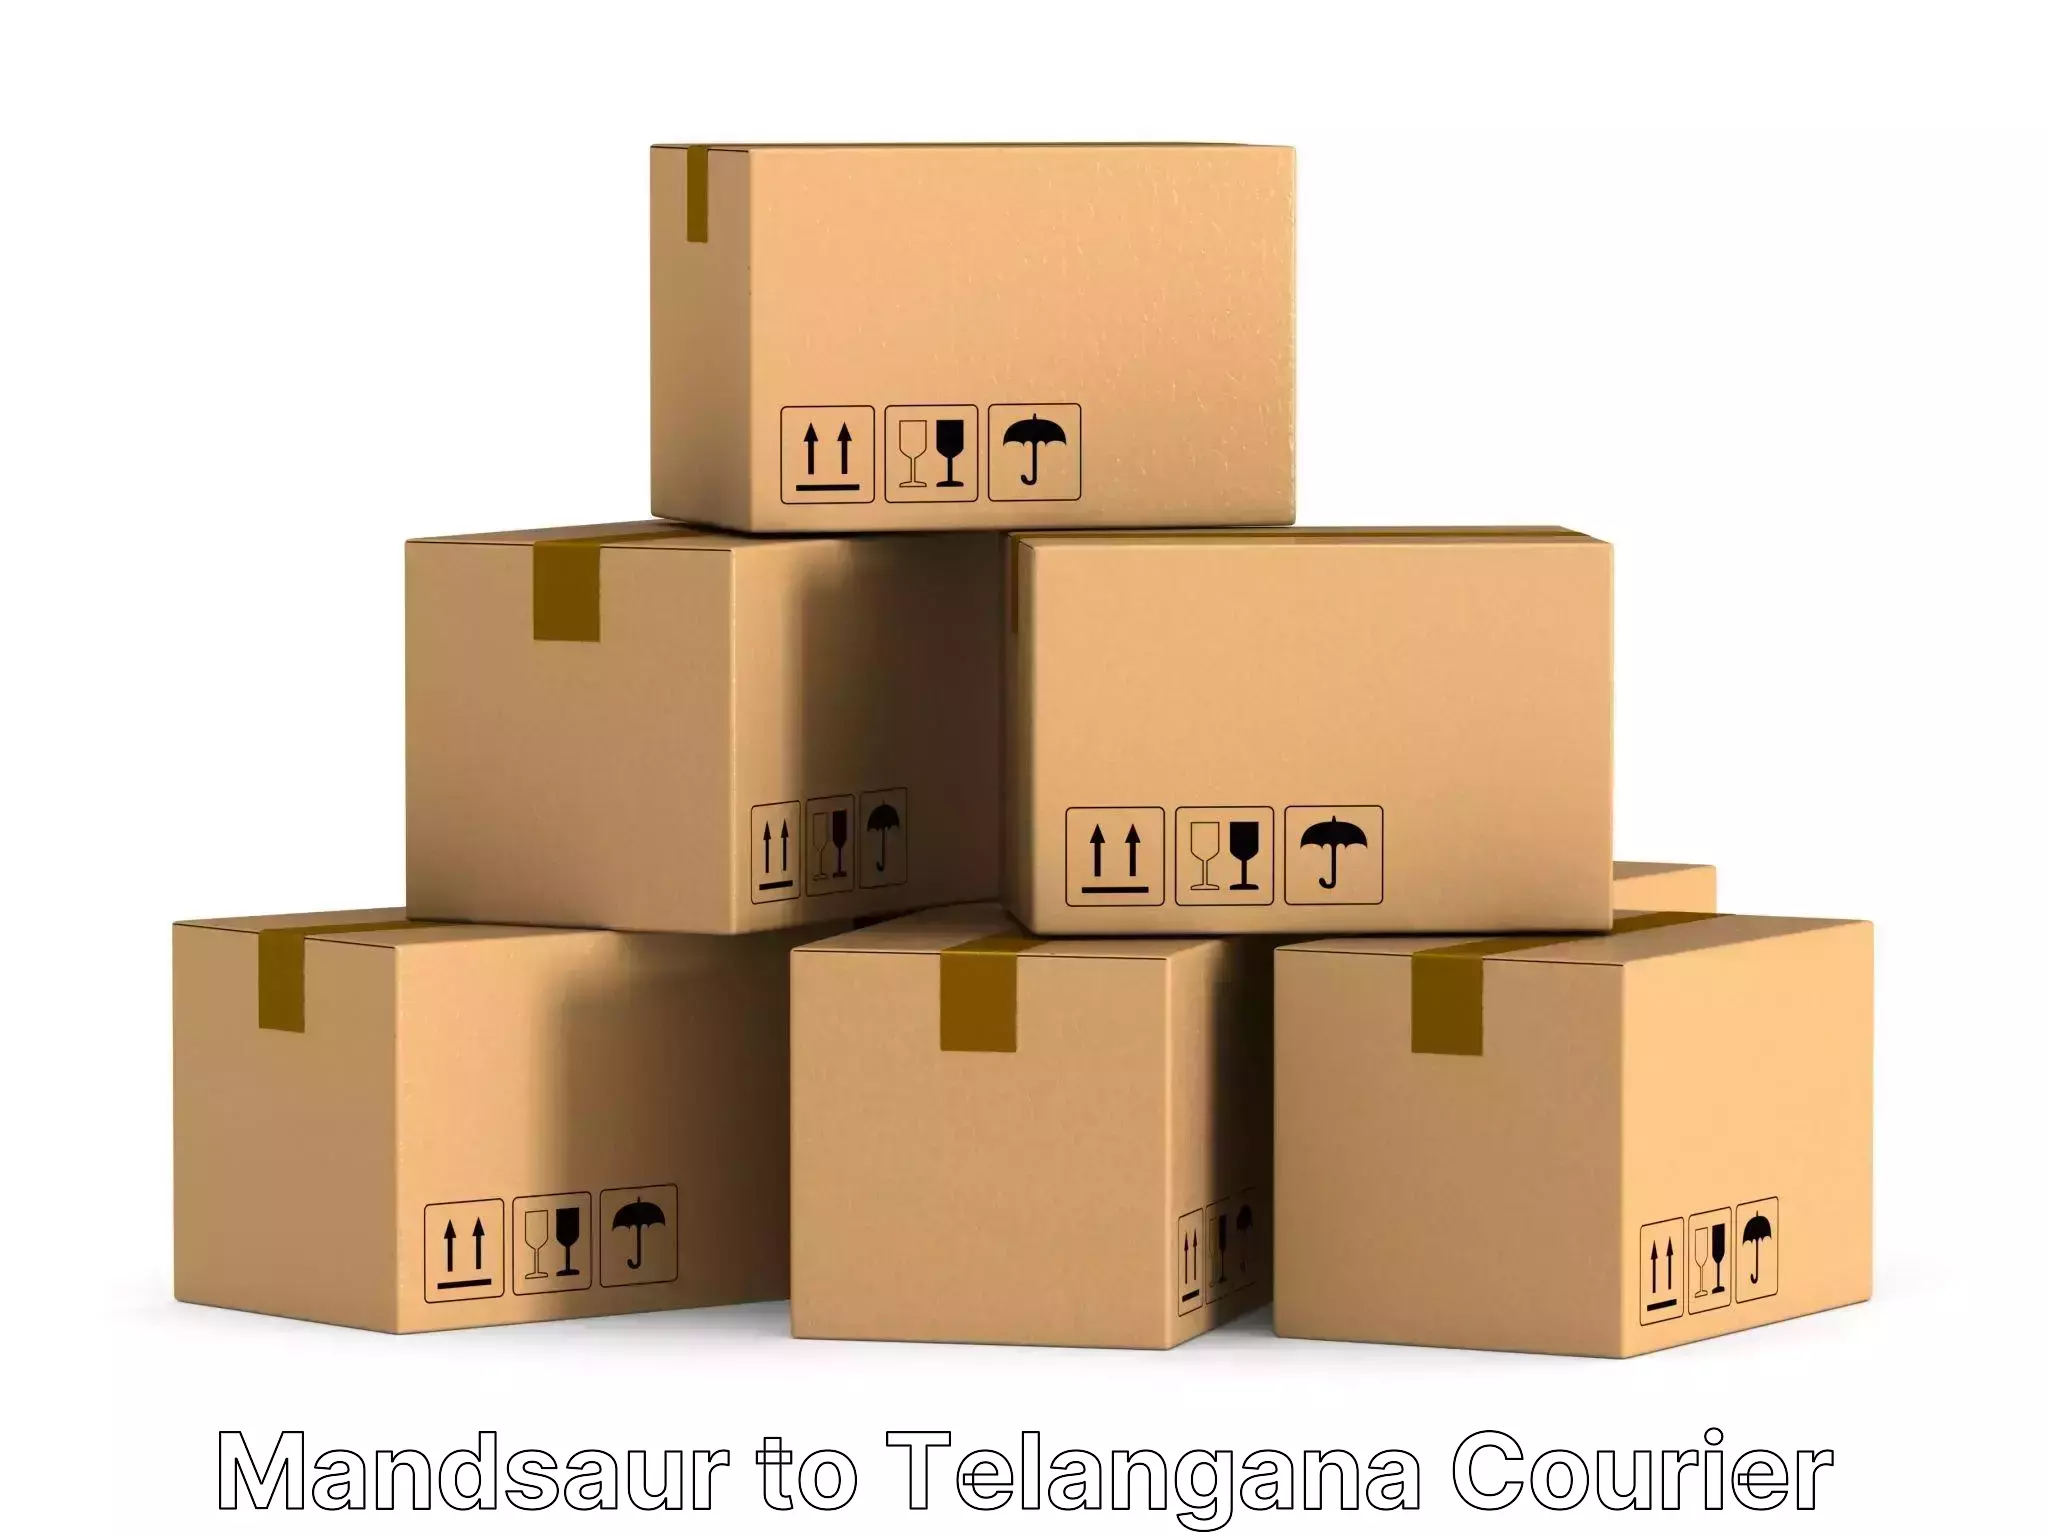 Moving and packing experts Mandsaur to Telangana